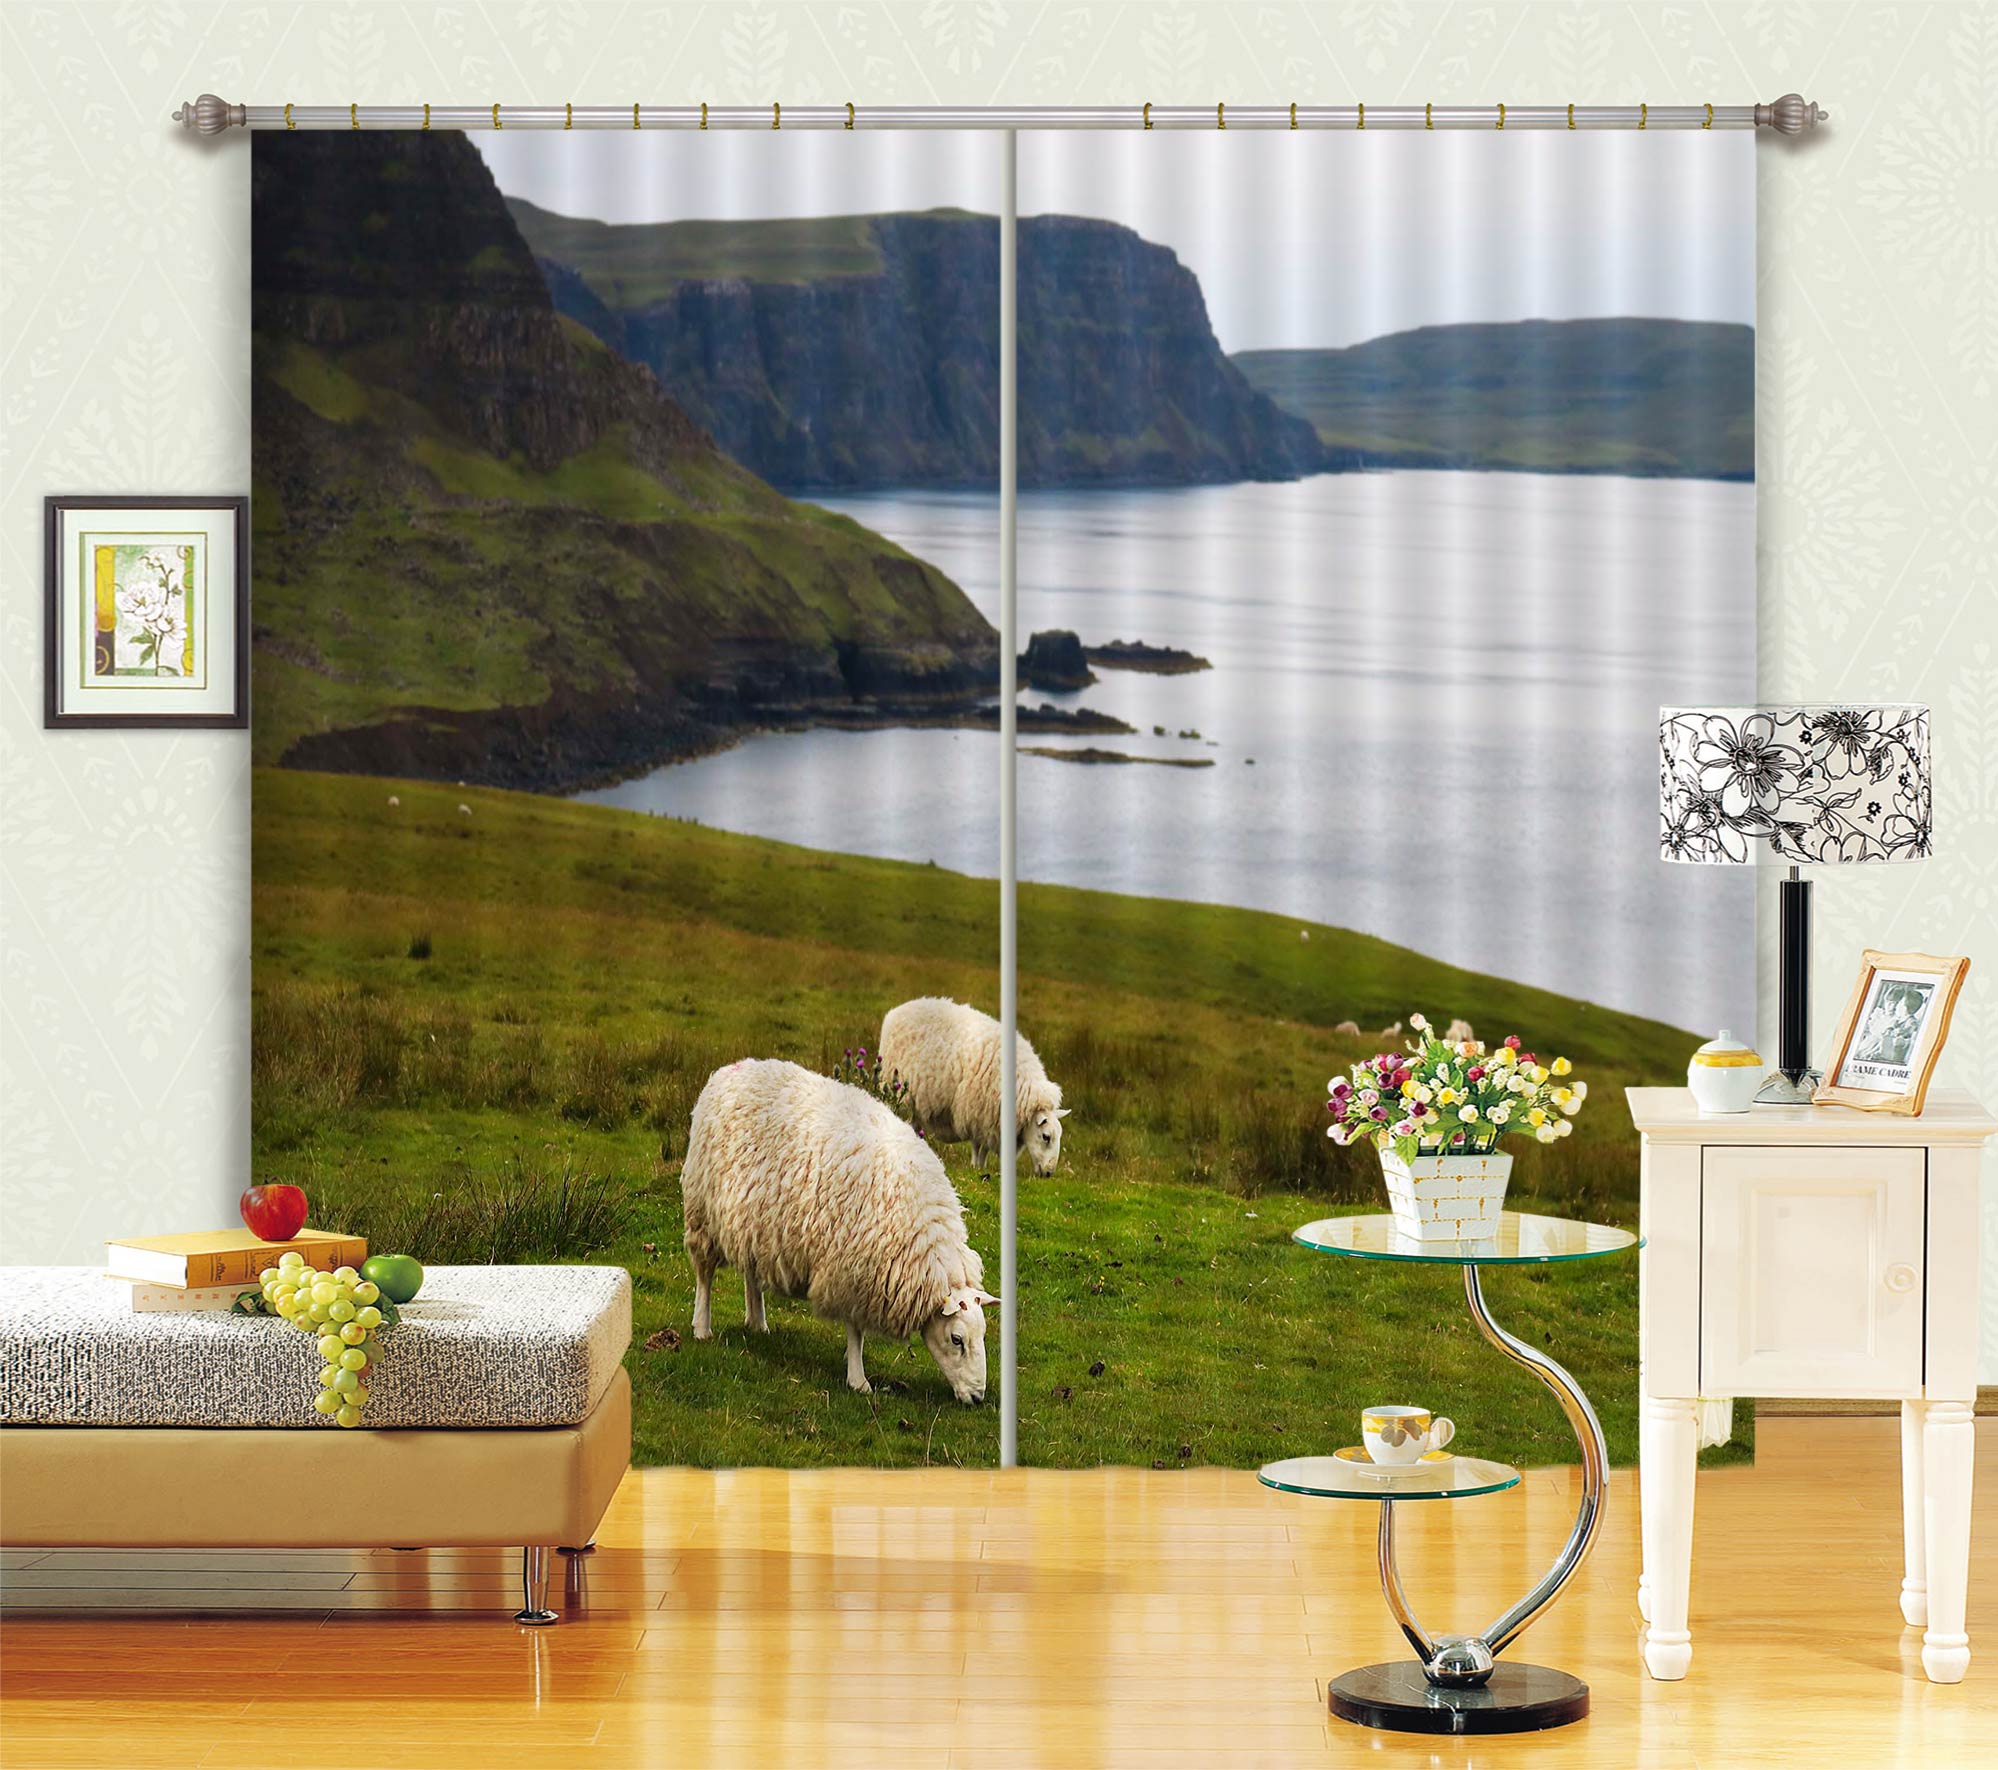 3D Scottish Sheep 021 Jerry LoFaro Curtain Curtains Drapes